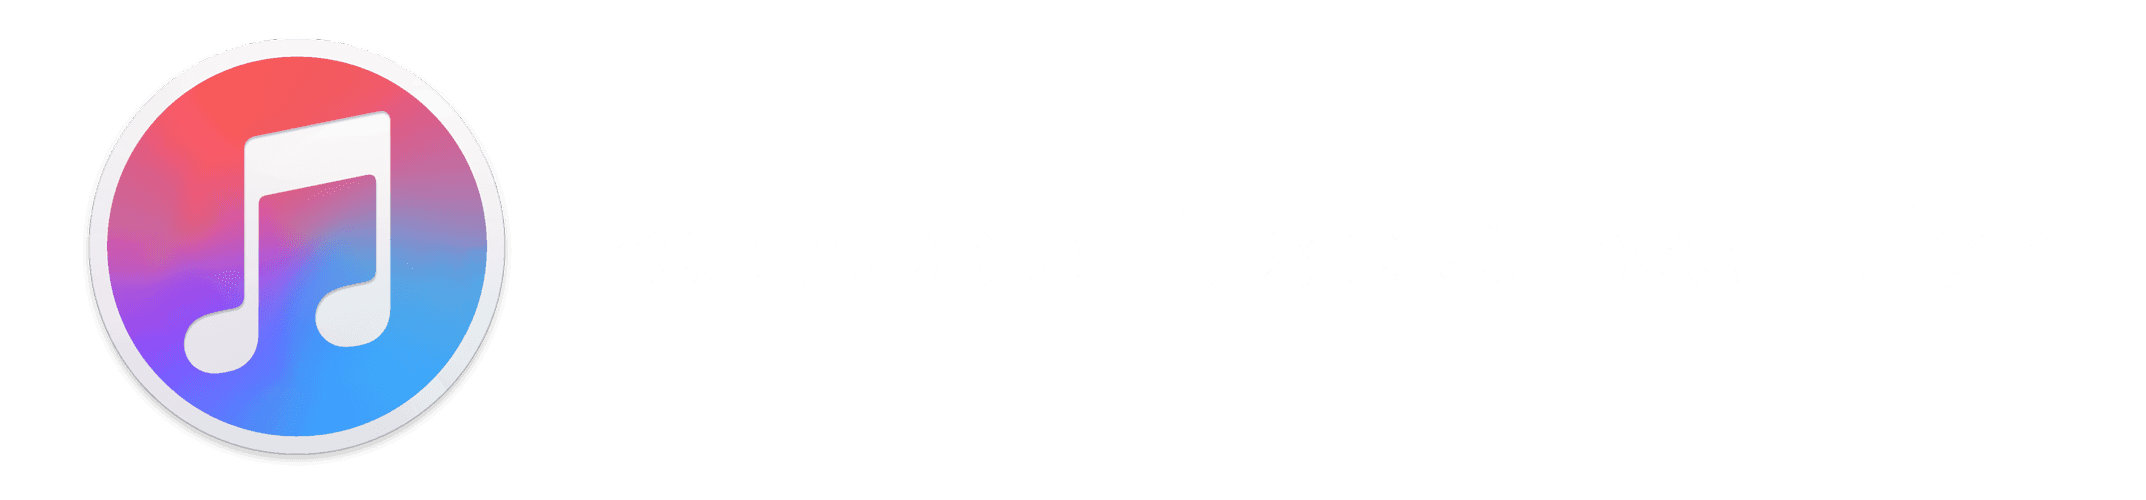 Free Apple Music Account Subscription